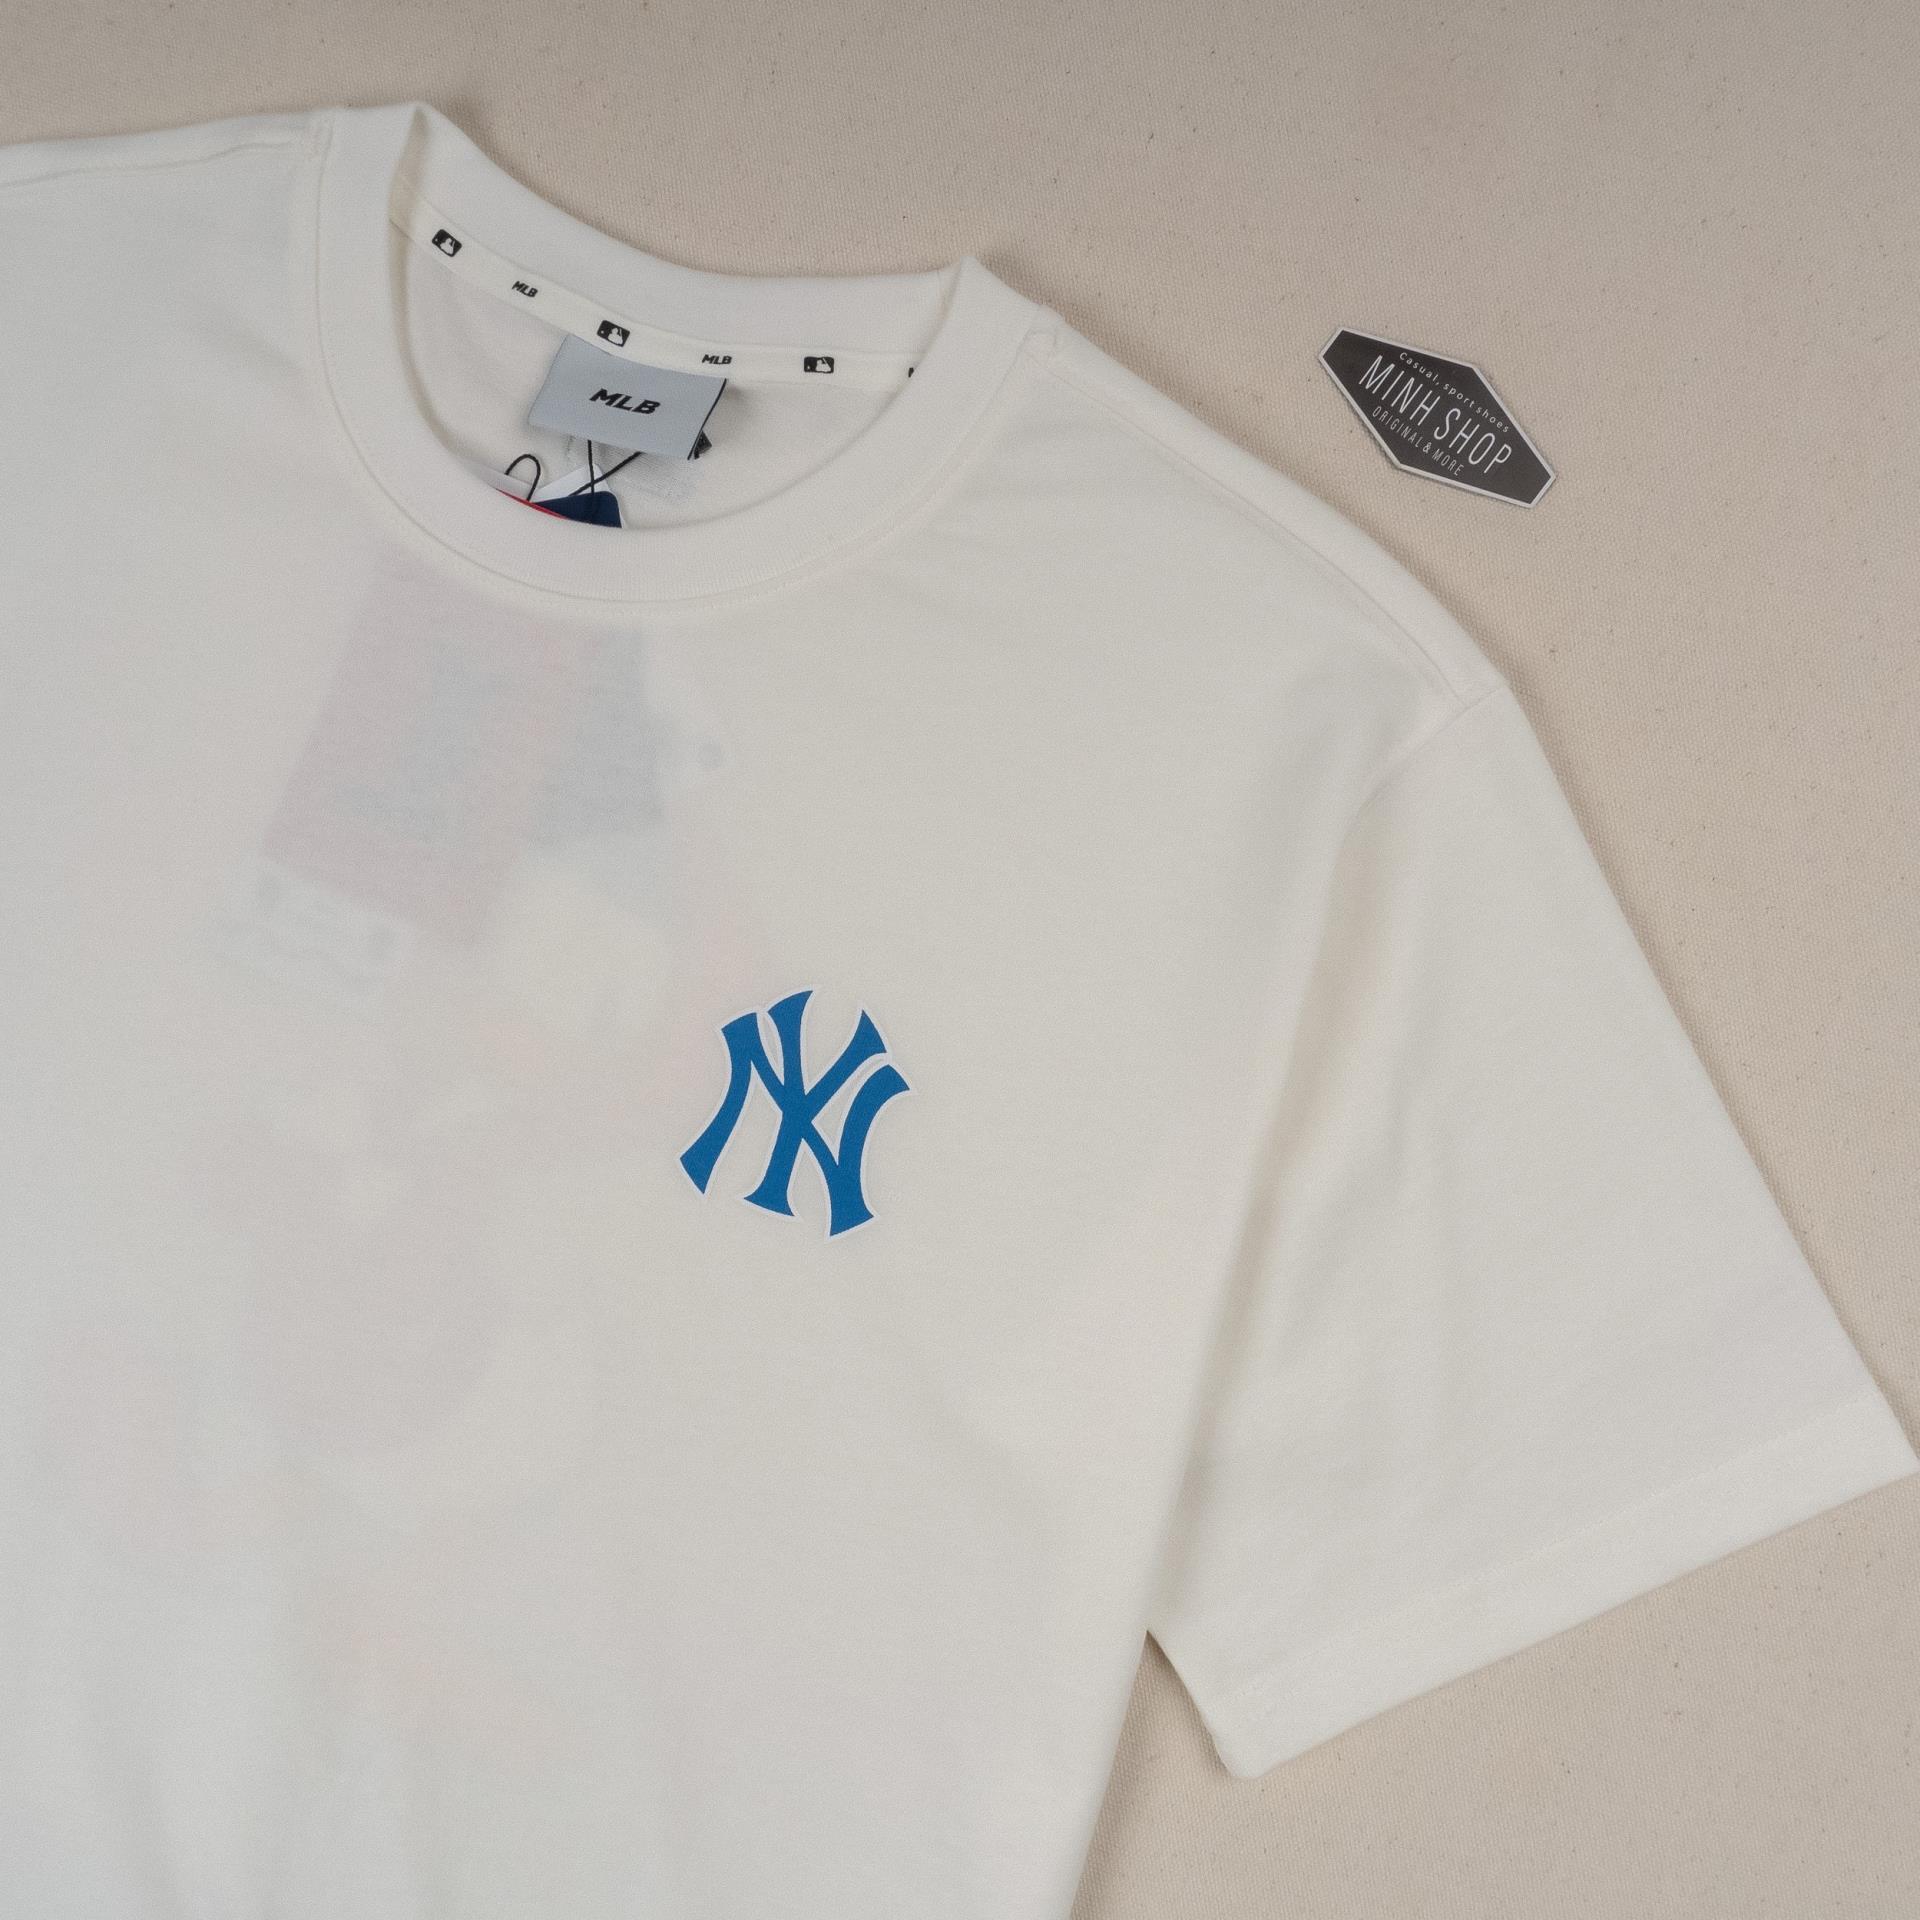 MLB NY big logo black Tshirt